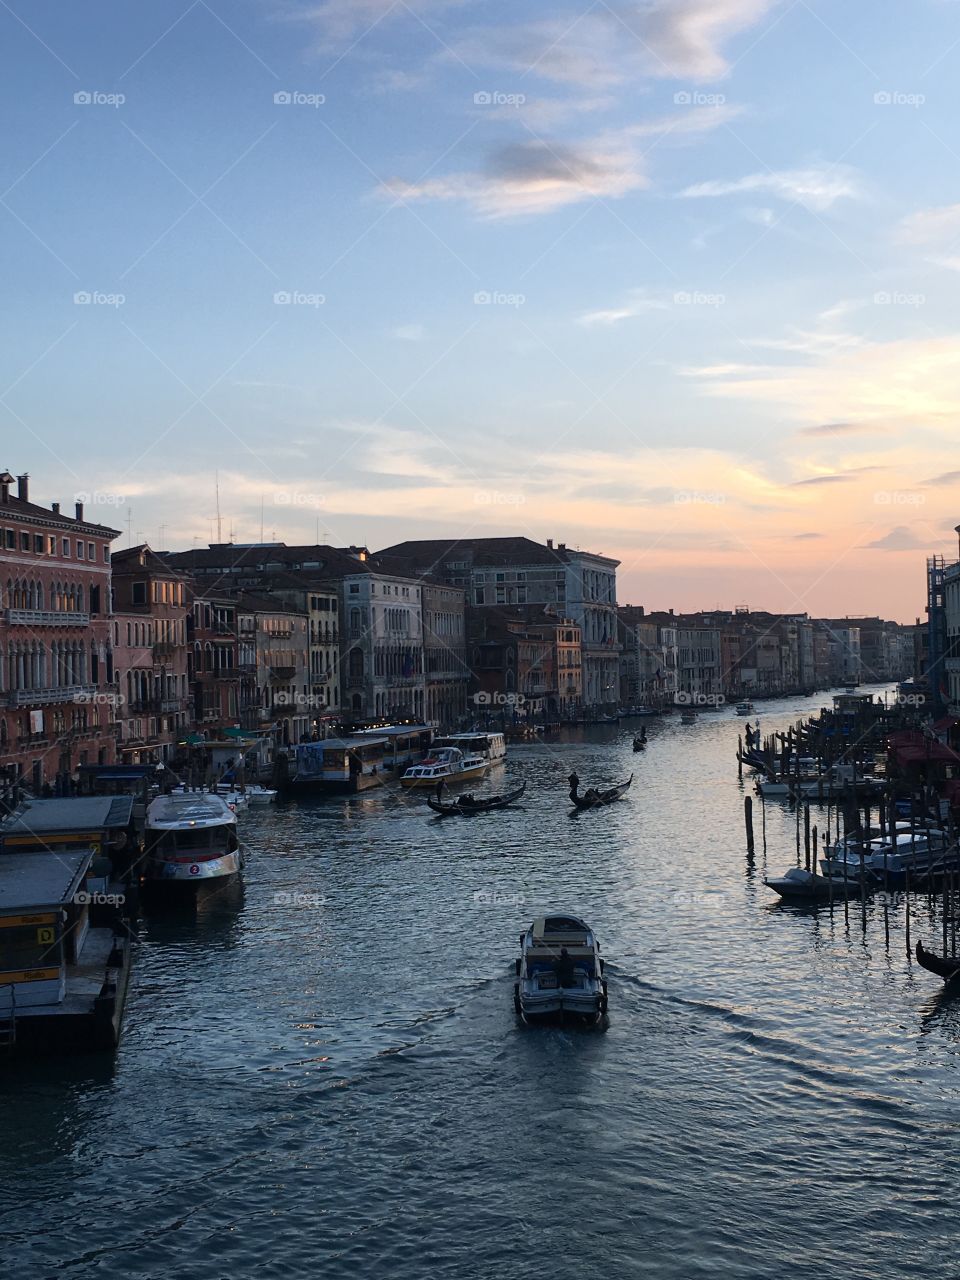 Venice-Grand Canal